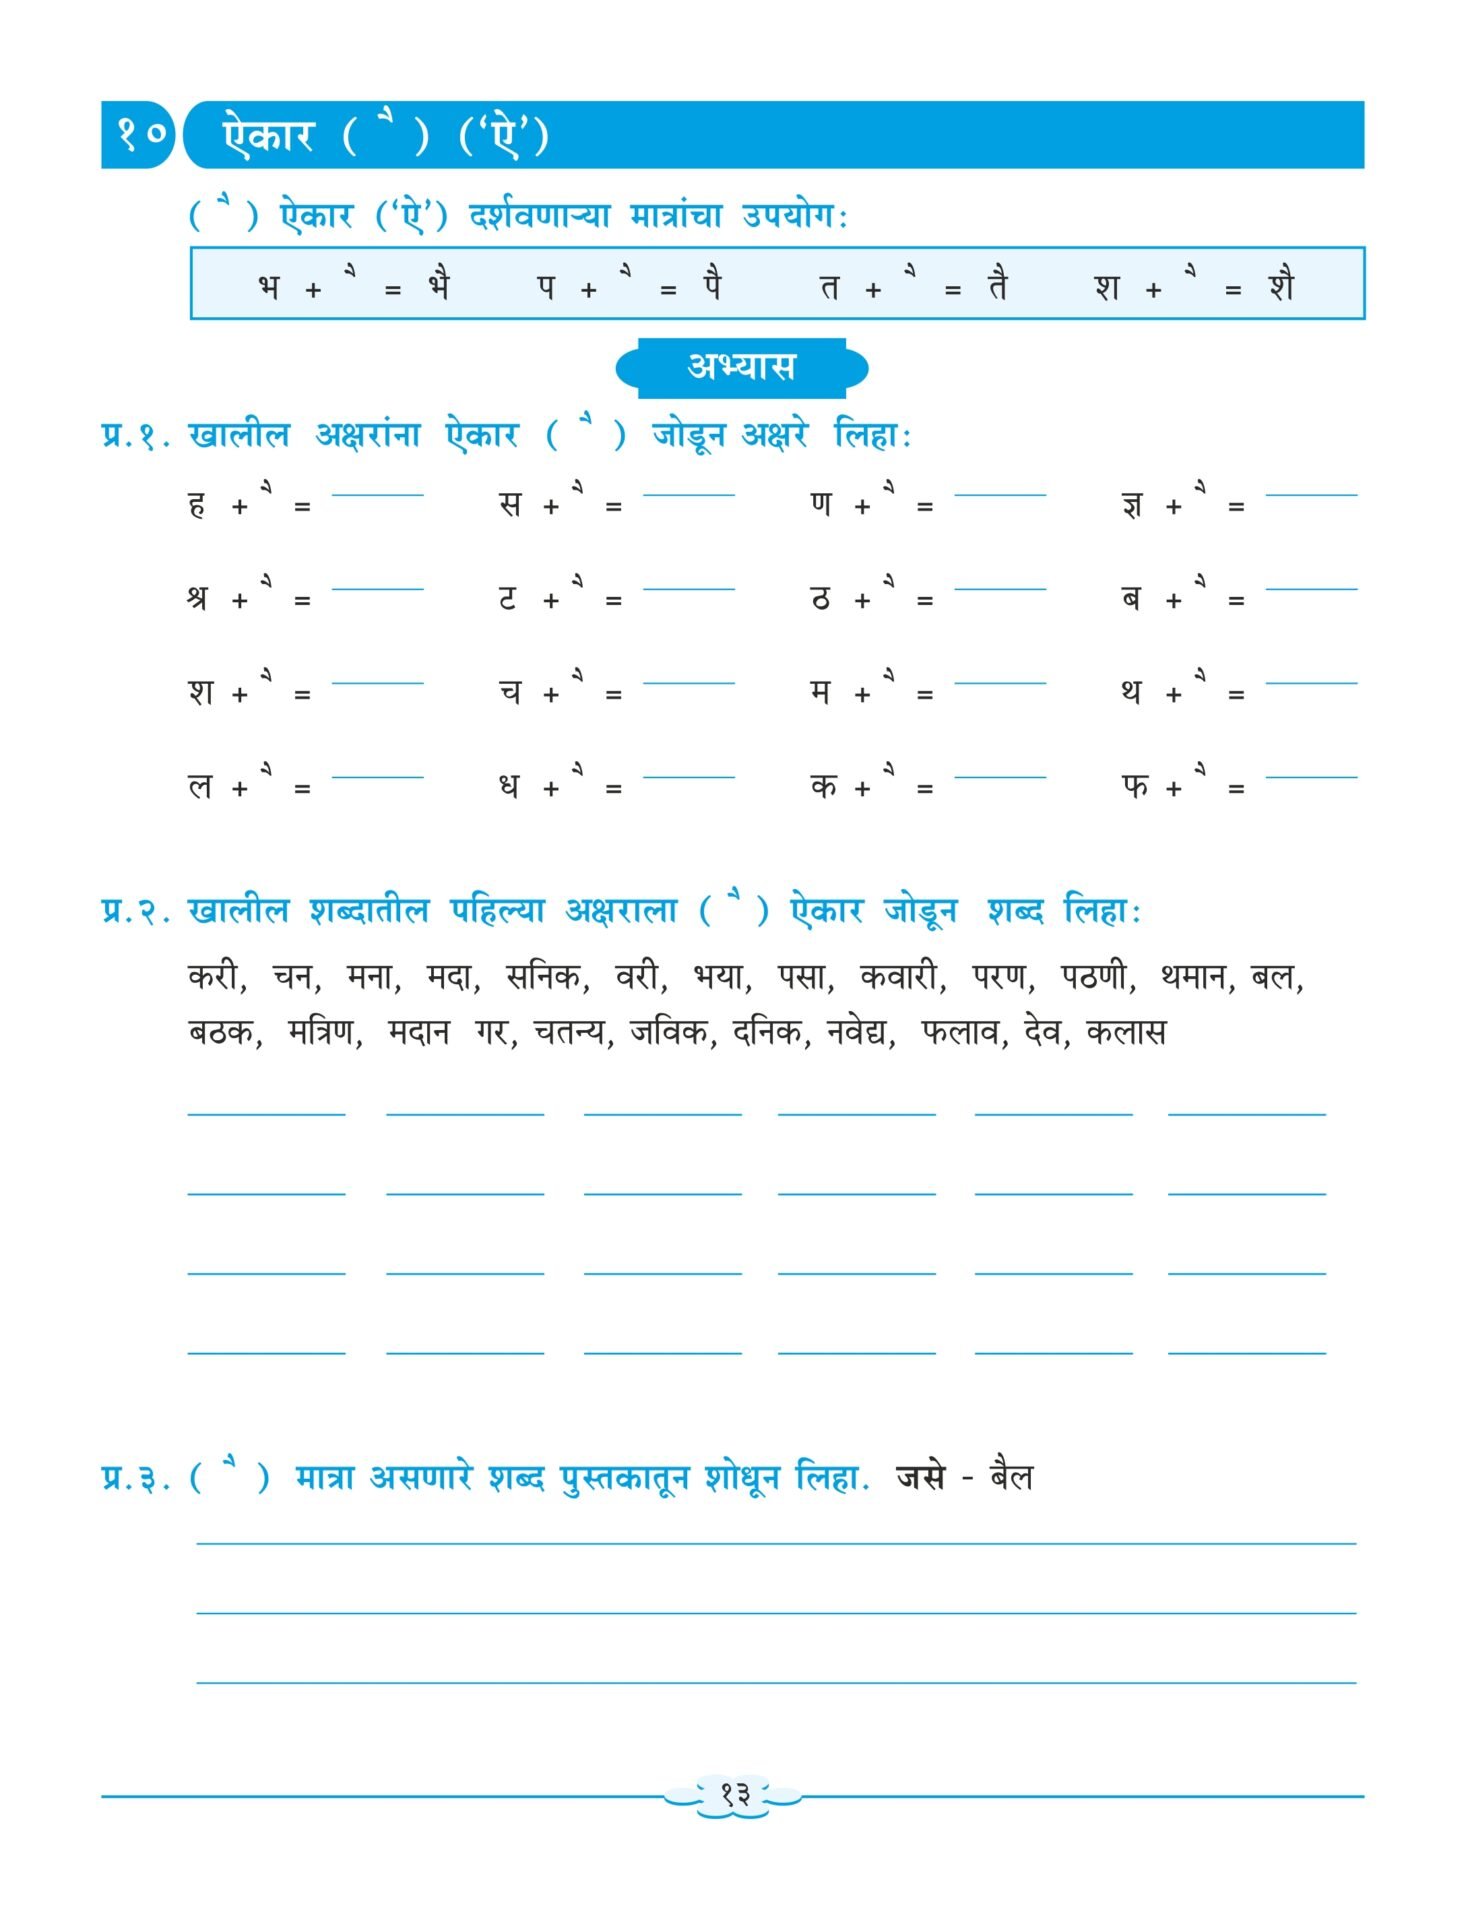 Nigam Marathi Sulabhbharati Grammar And Writing Skills Standard 5 5